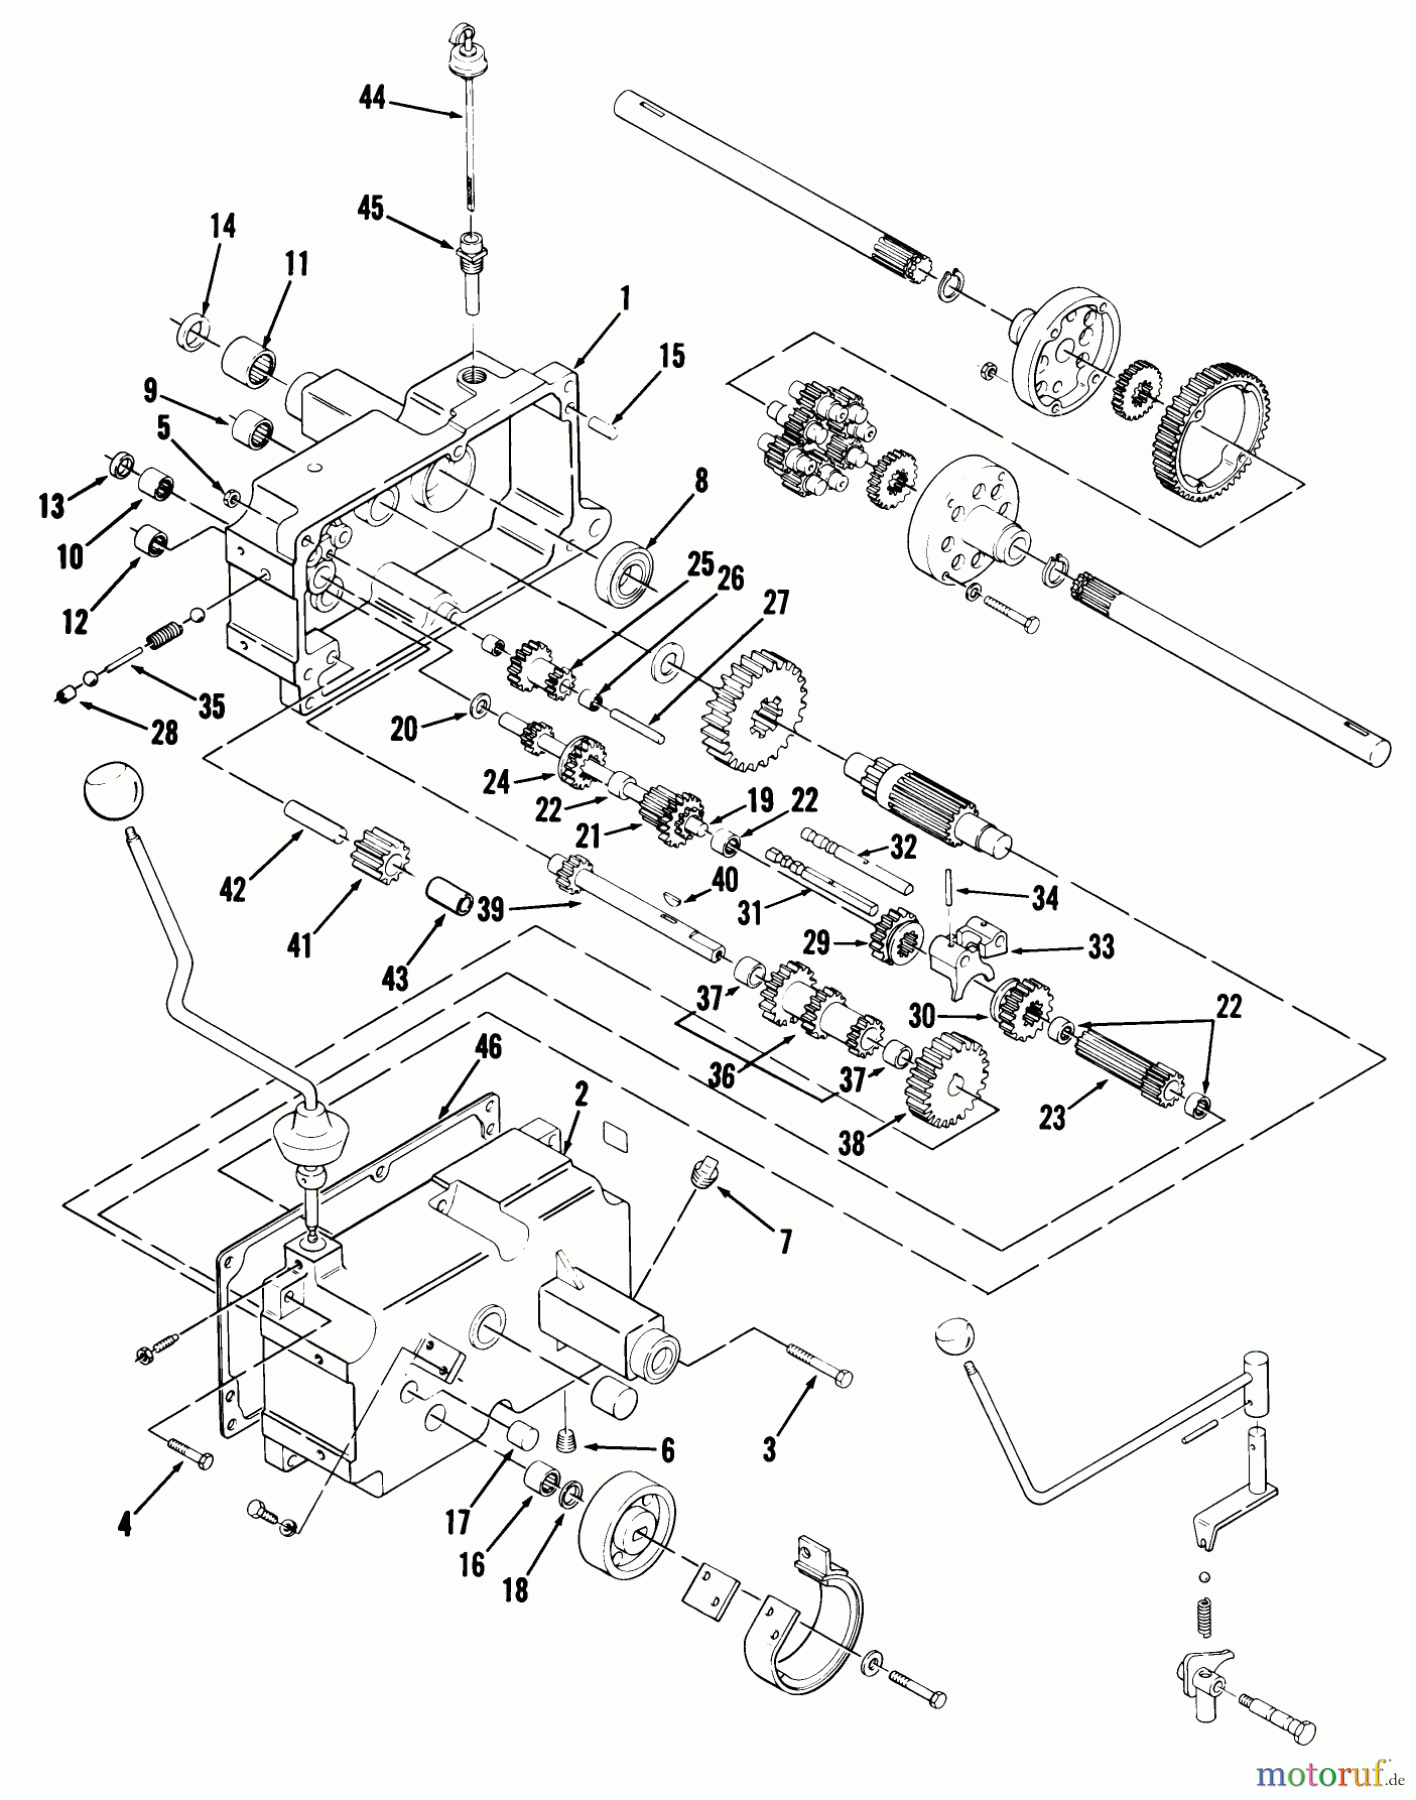  Toro Neu Mowers, Lawn & Garden Tractor Seite 1 01-14KE01 (C-145) - Toro C-145 Automatic Tractor, 1980 MECHANICAL TRANSMISSION-8 SPEED #1